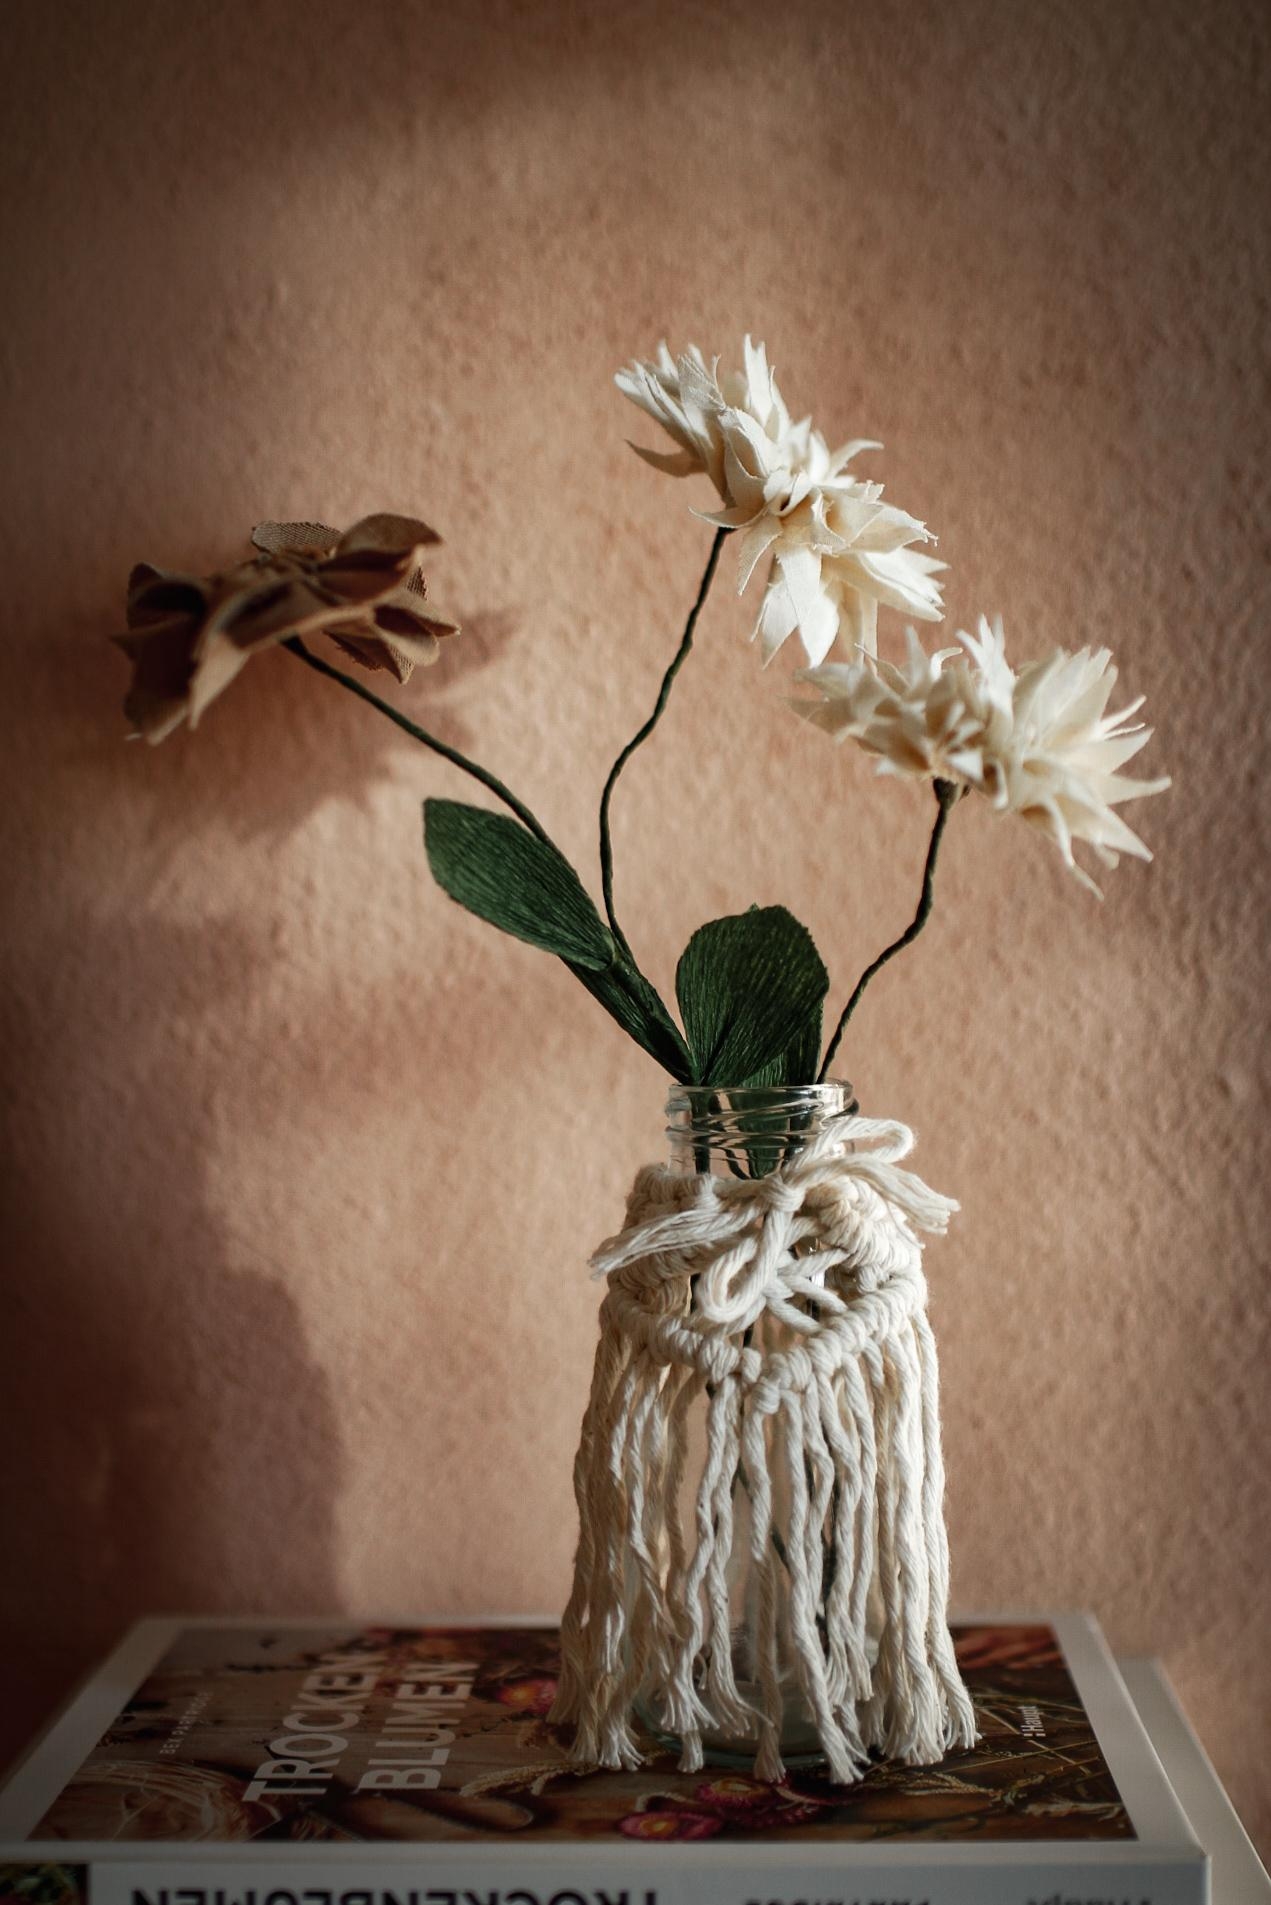 #fabricflowers #stoffblumen #diyblog #diyhomedecor #floraldesign #handmade #frühlingserwachen #springdecor 